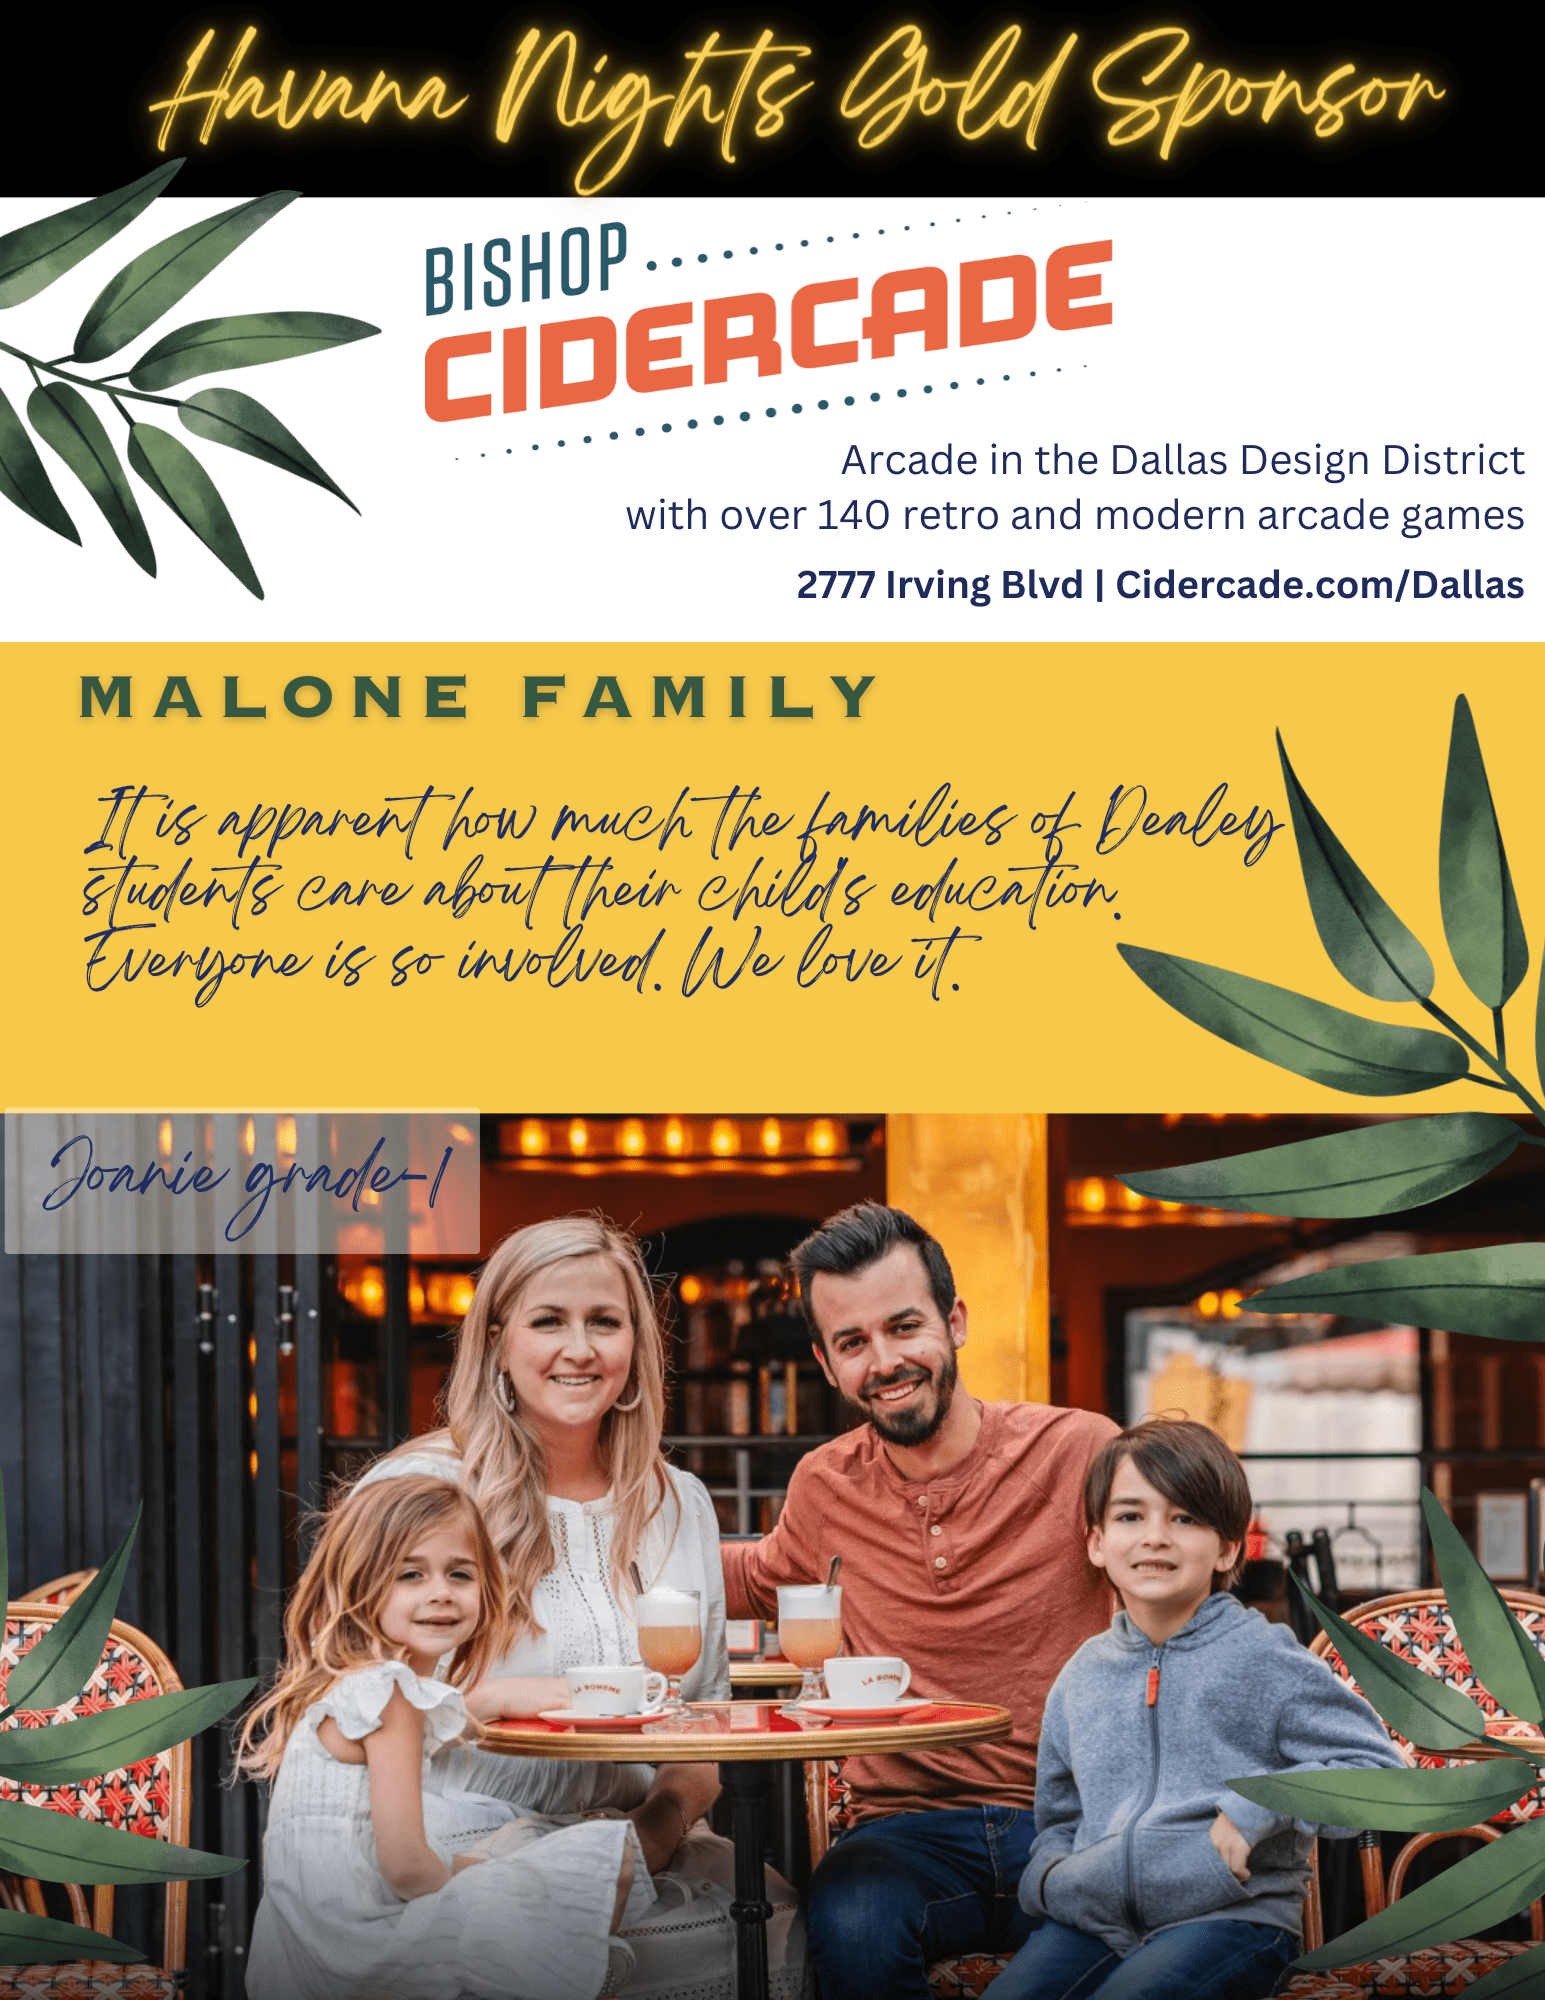 Sponsor - gold - Cidercade - Malone family